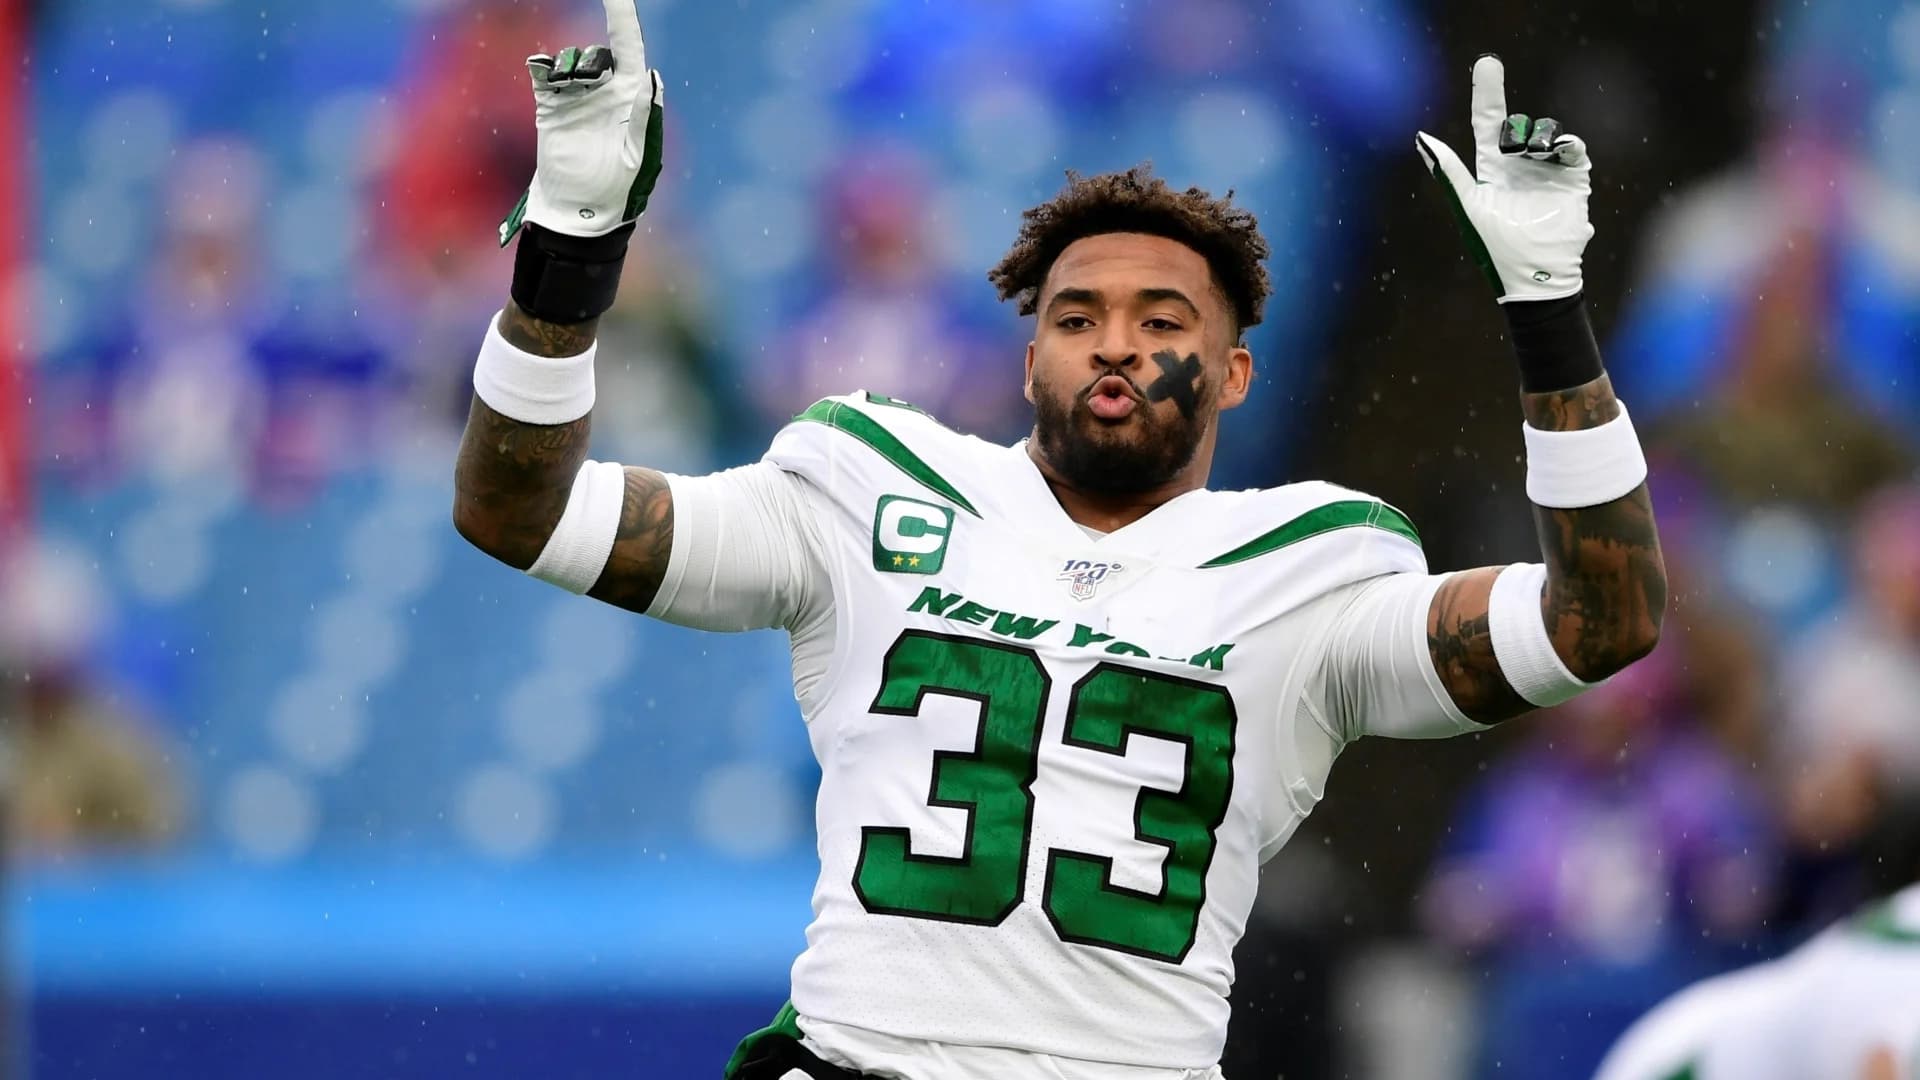 Jets trade disgruntled star safety Jamal Adams to Seahawks